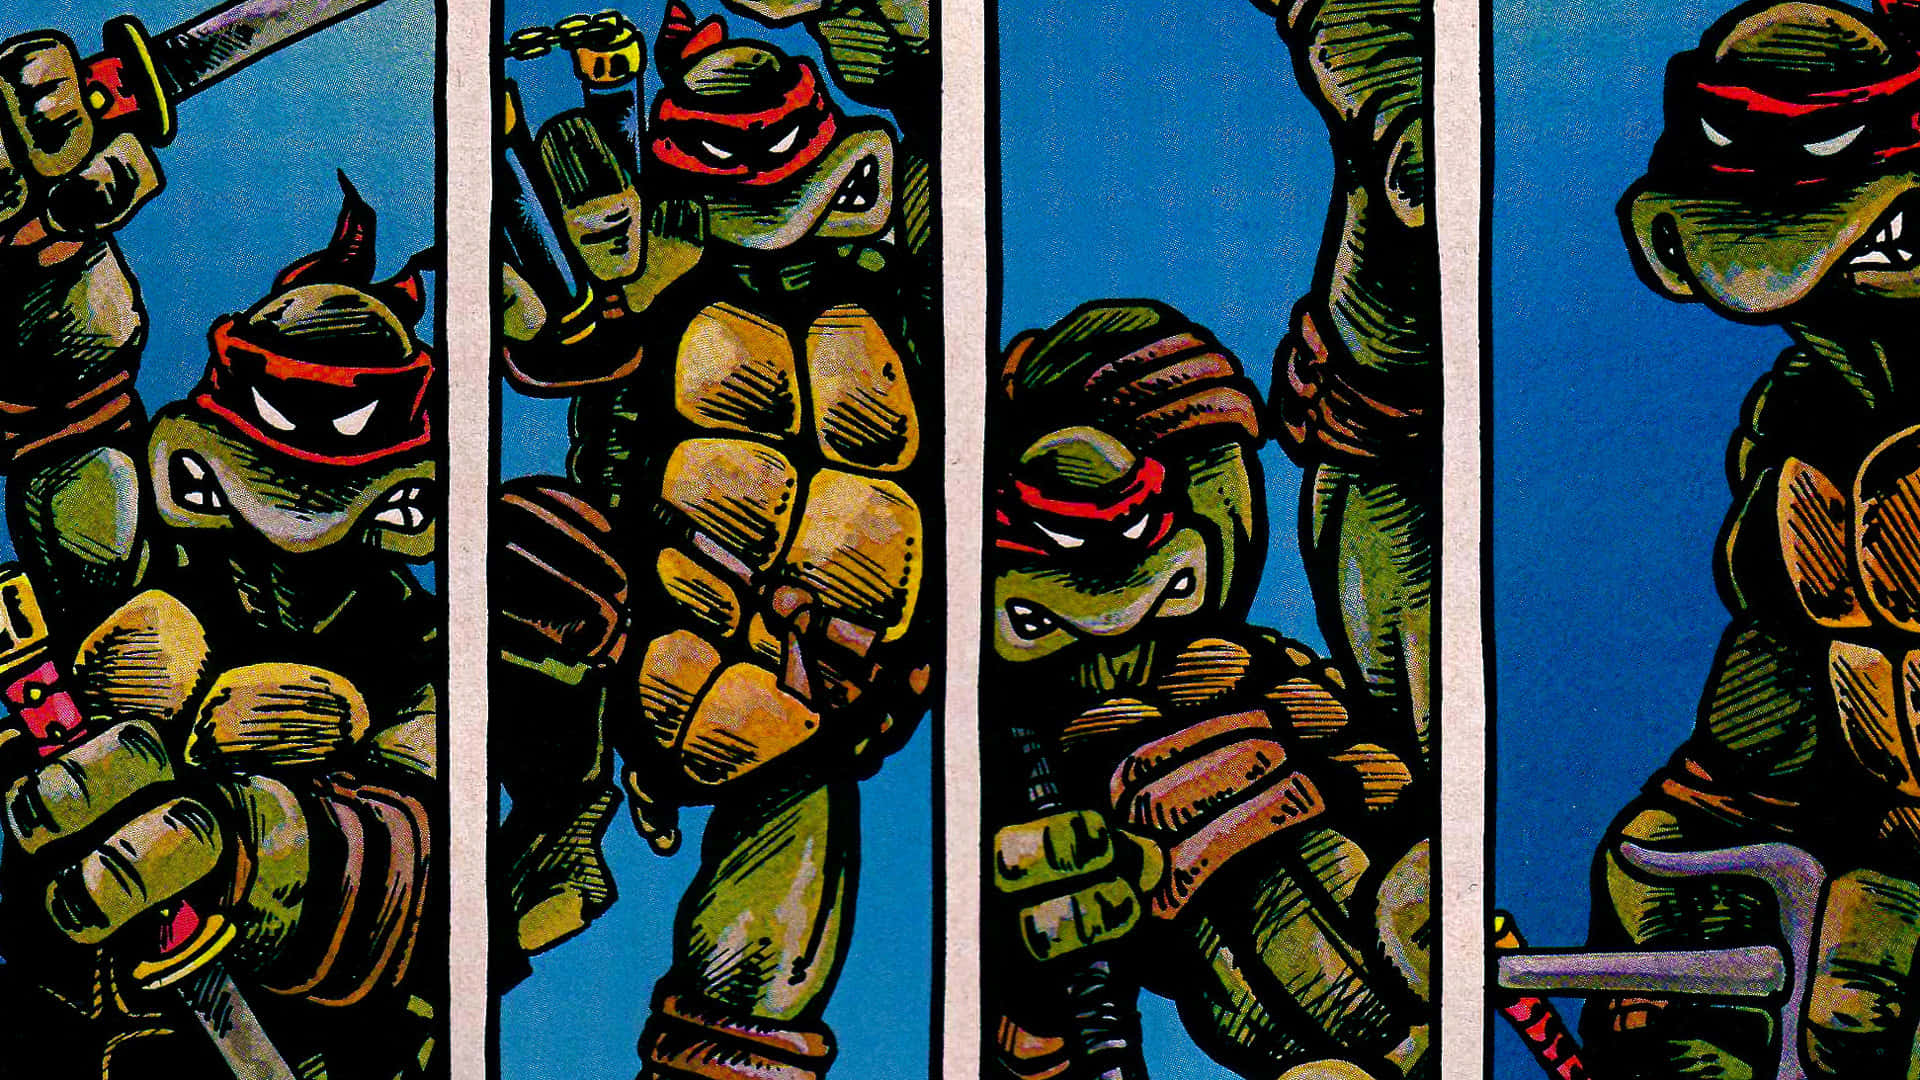 Teenage Mutant Ninja Turtles - The Heroes In A Half Shell Background